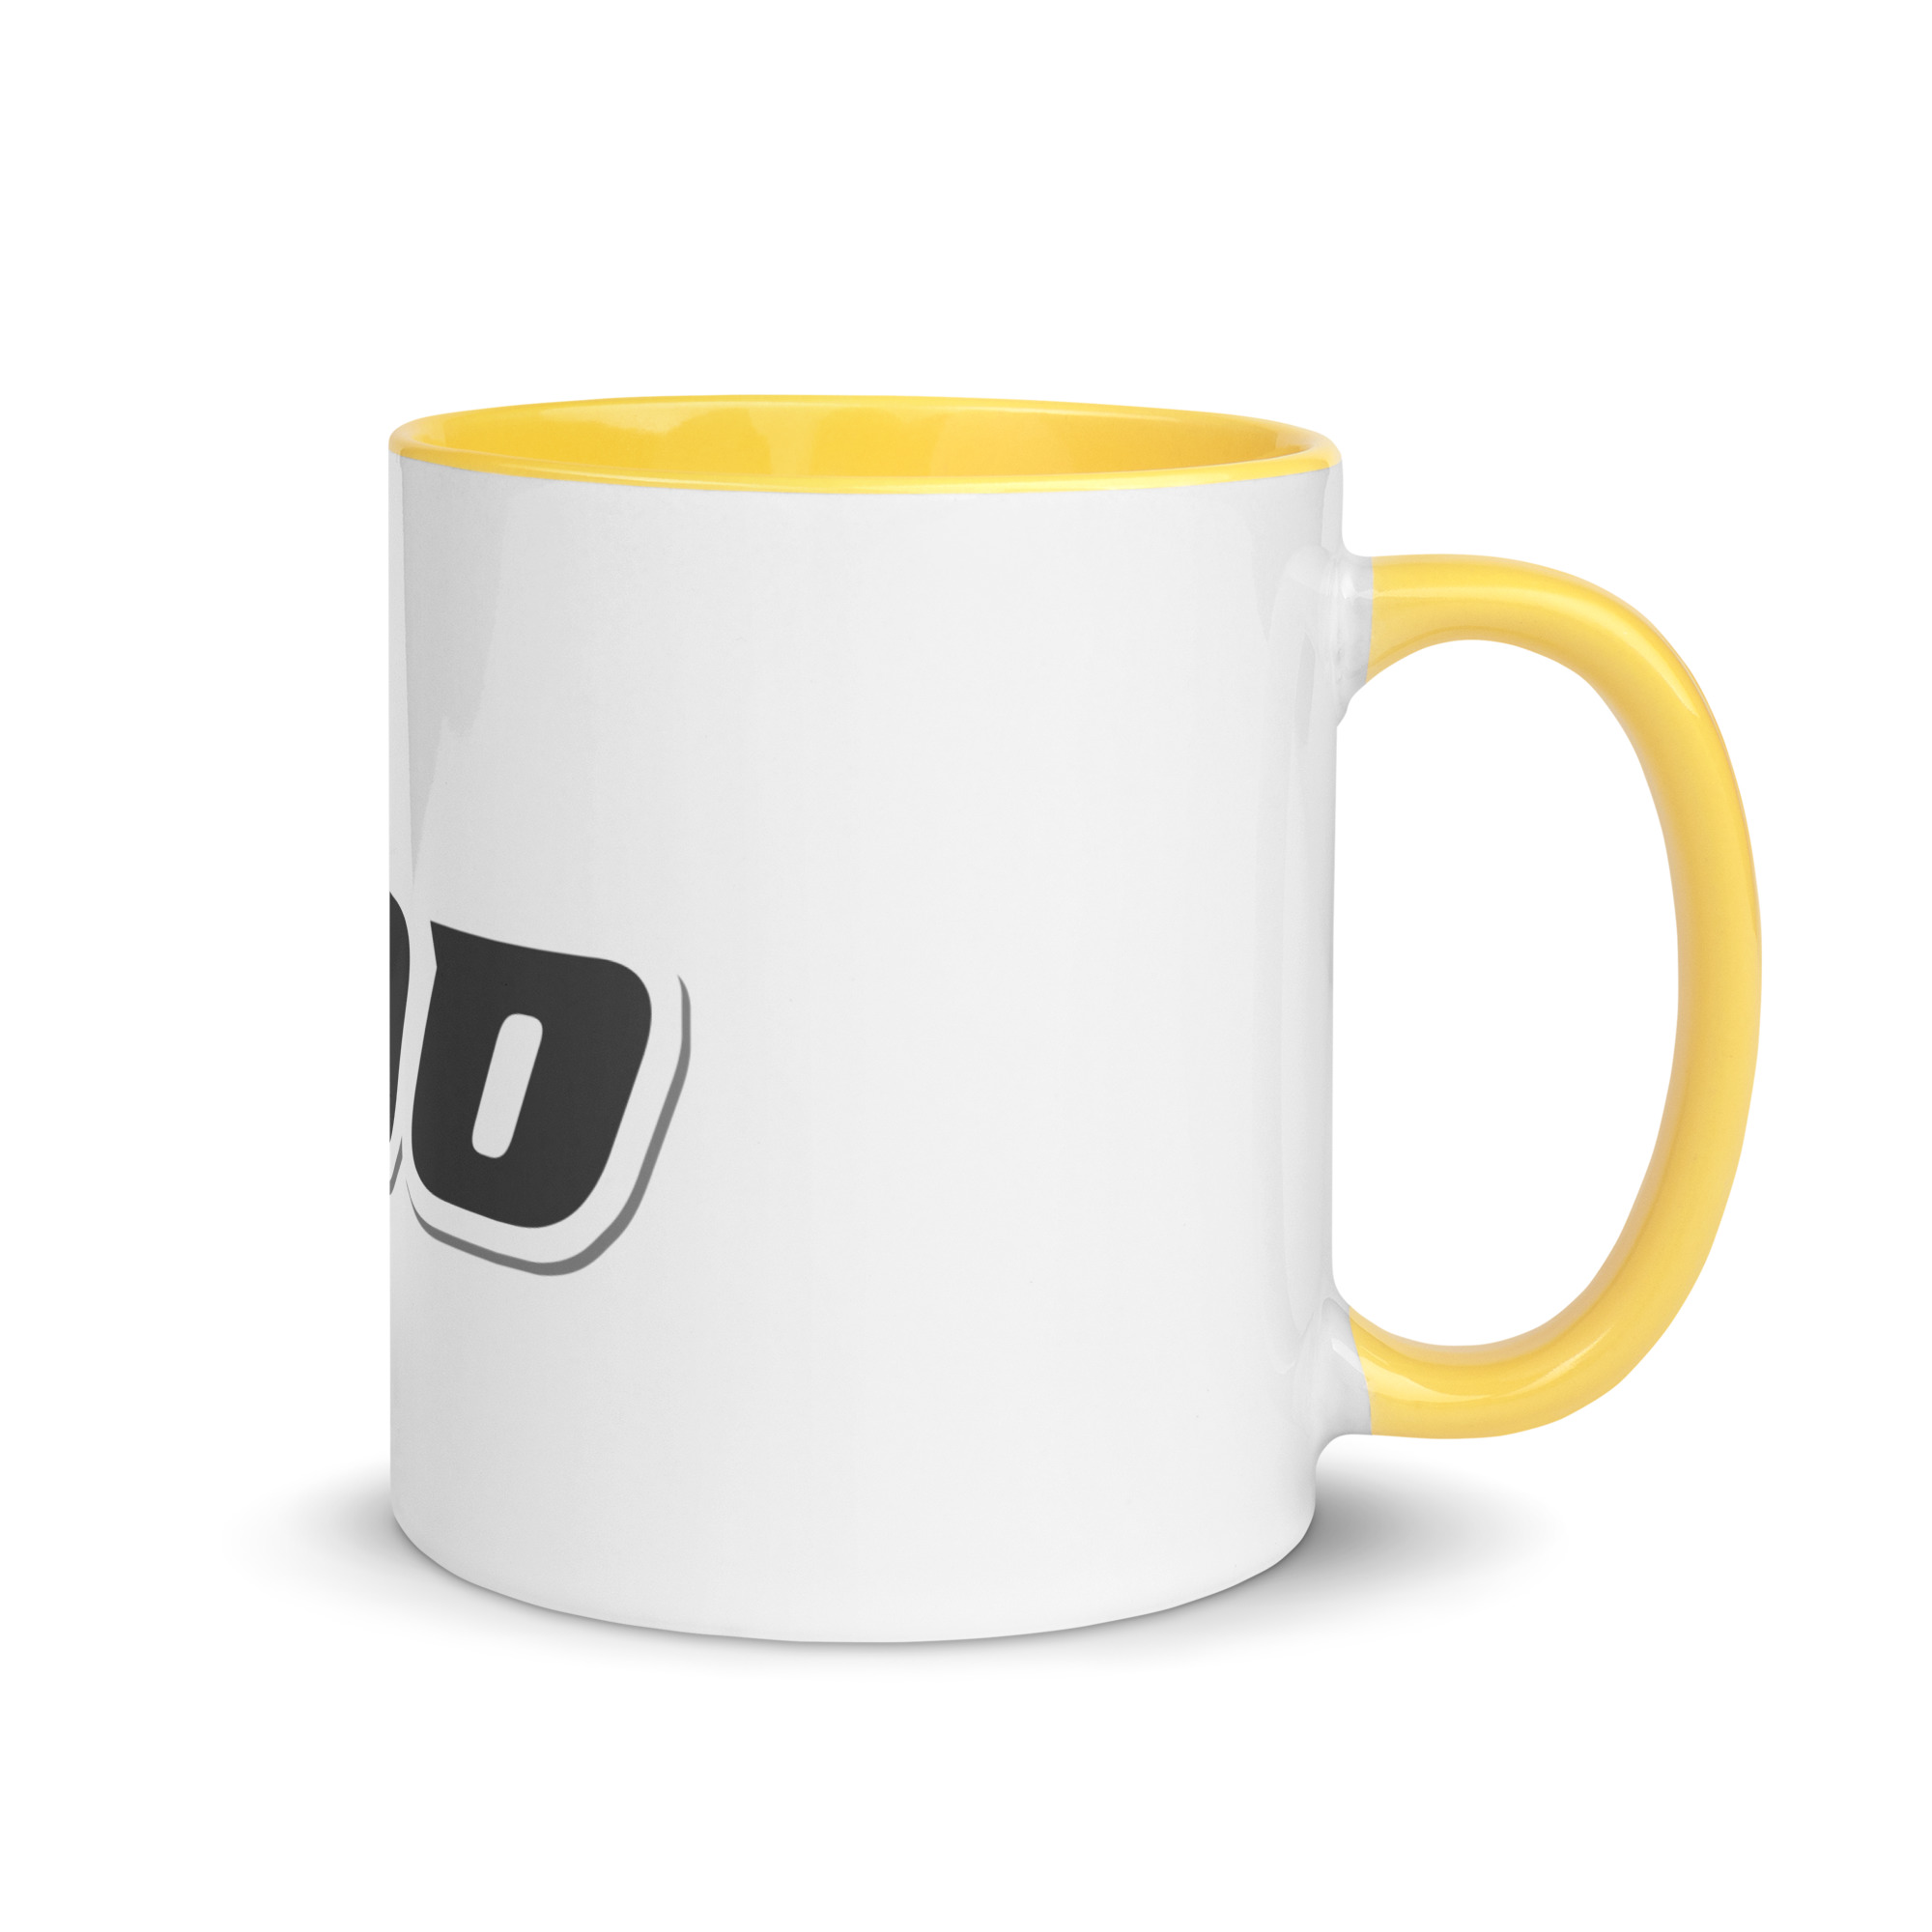 white-ceramic-mug-with-color-inside-yellow-11-oz-right-6525b6484cc40.jpg